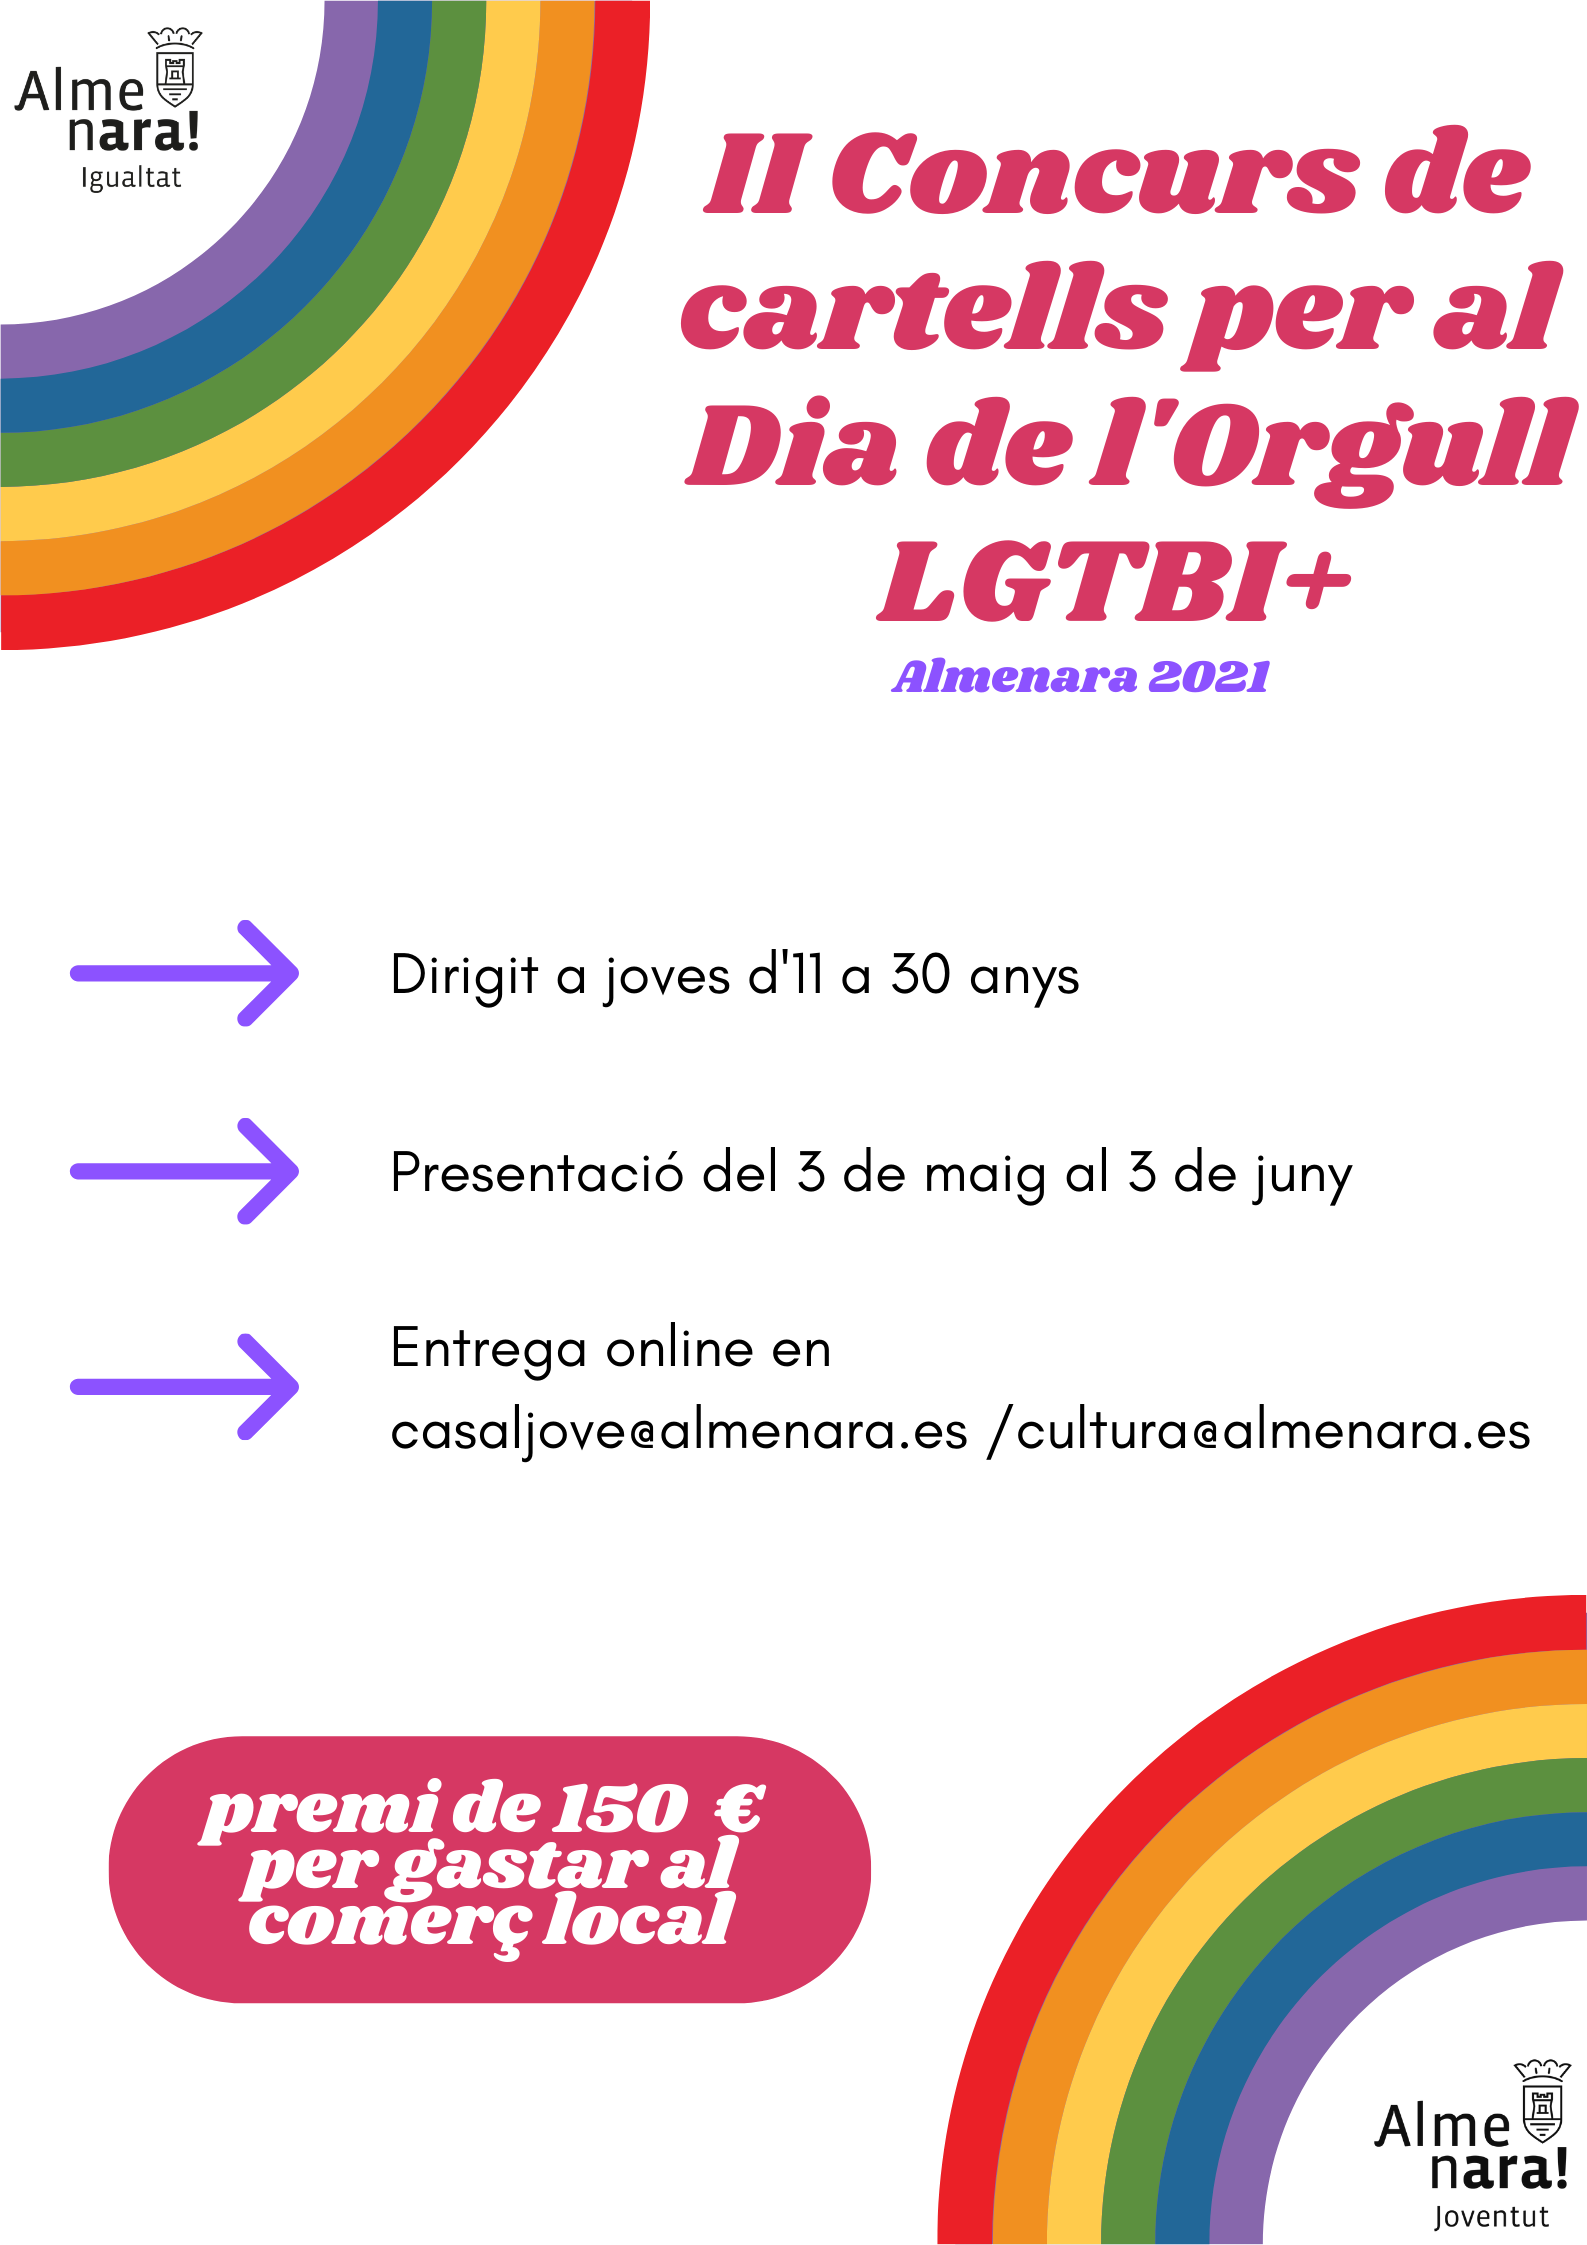 Almenara convoca el concurso de carteles sobre el día internacional del Orgullo LGTBI